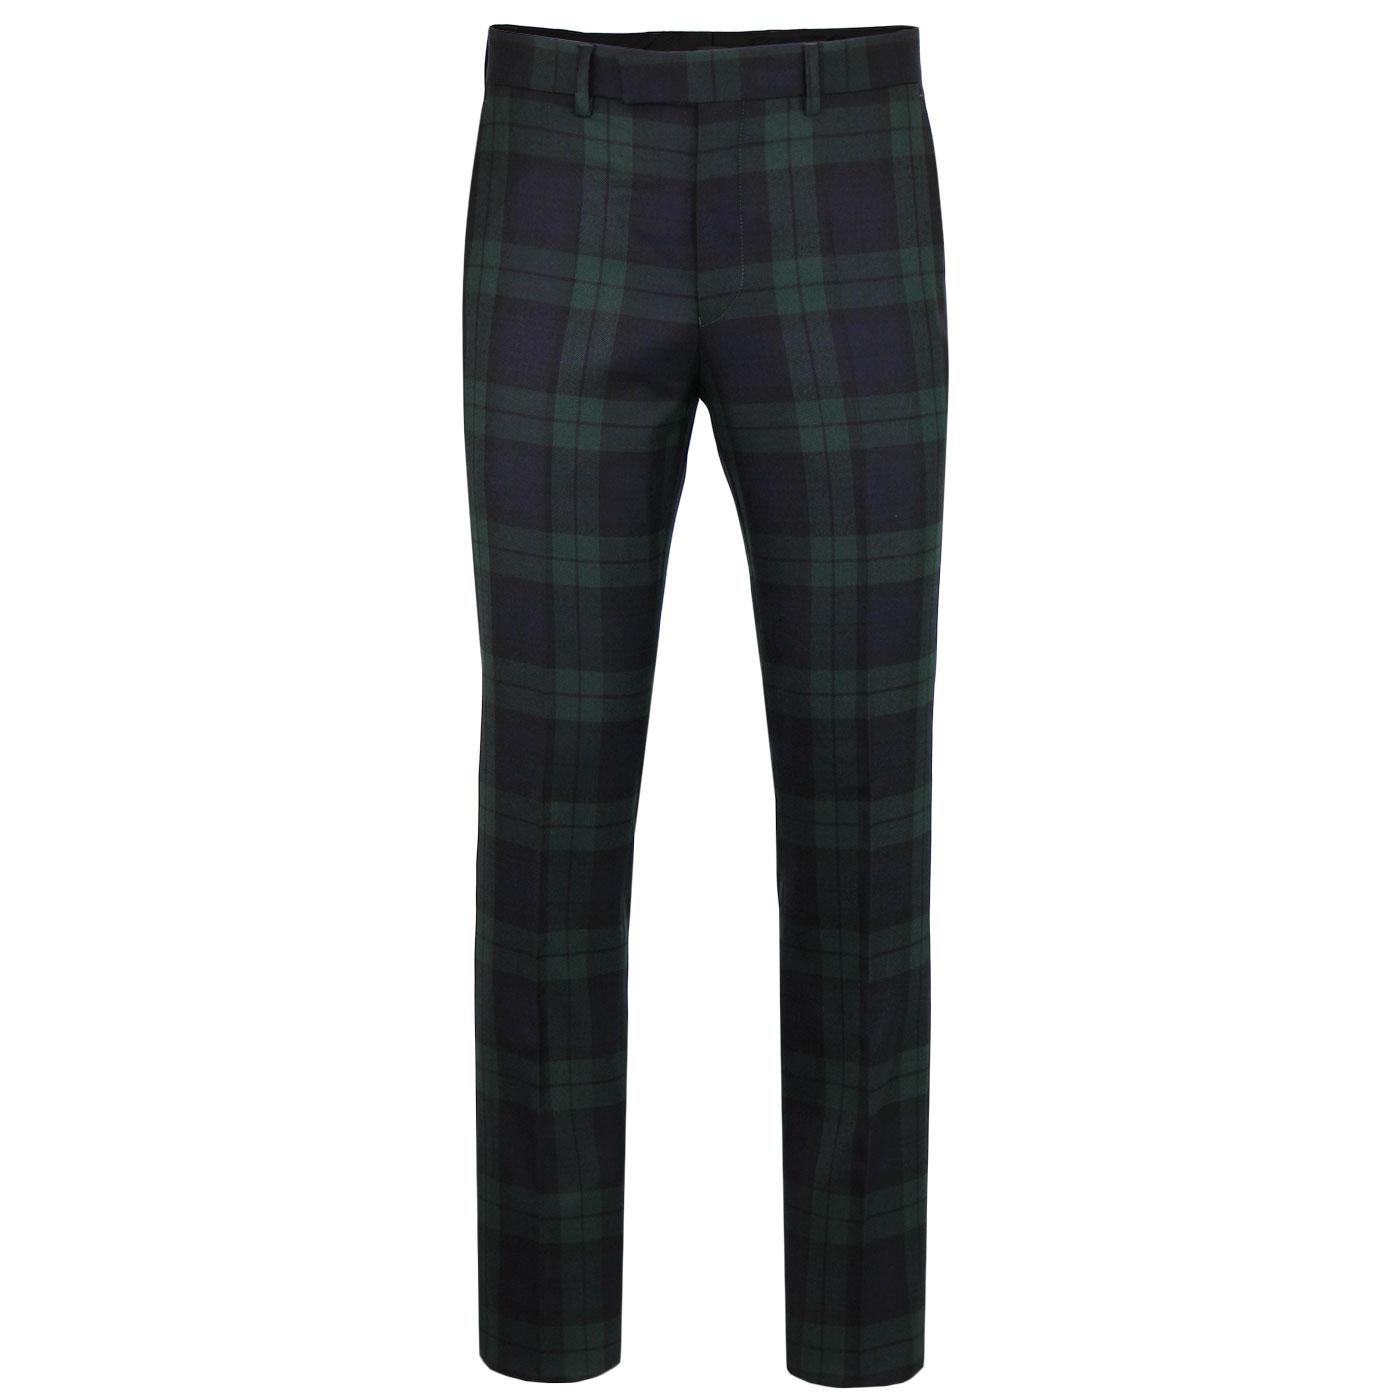 PRETTY GREEN Black Label Mod Check Suit Trousers